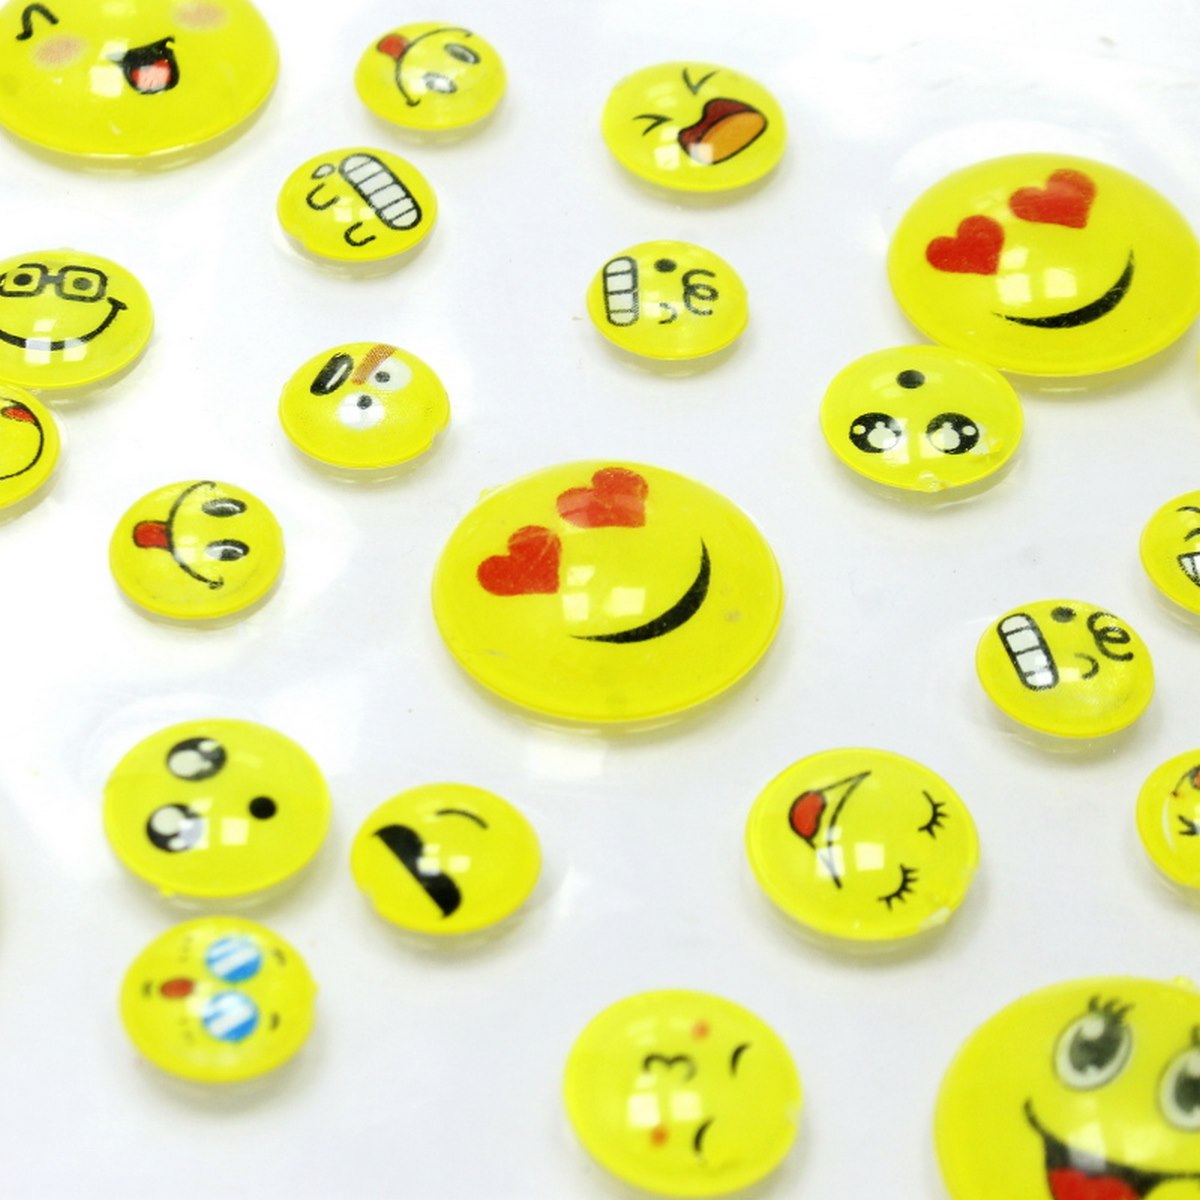 jags-mumbai scrapbook Stickers Sticker Smile Face Big GSS00